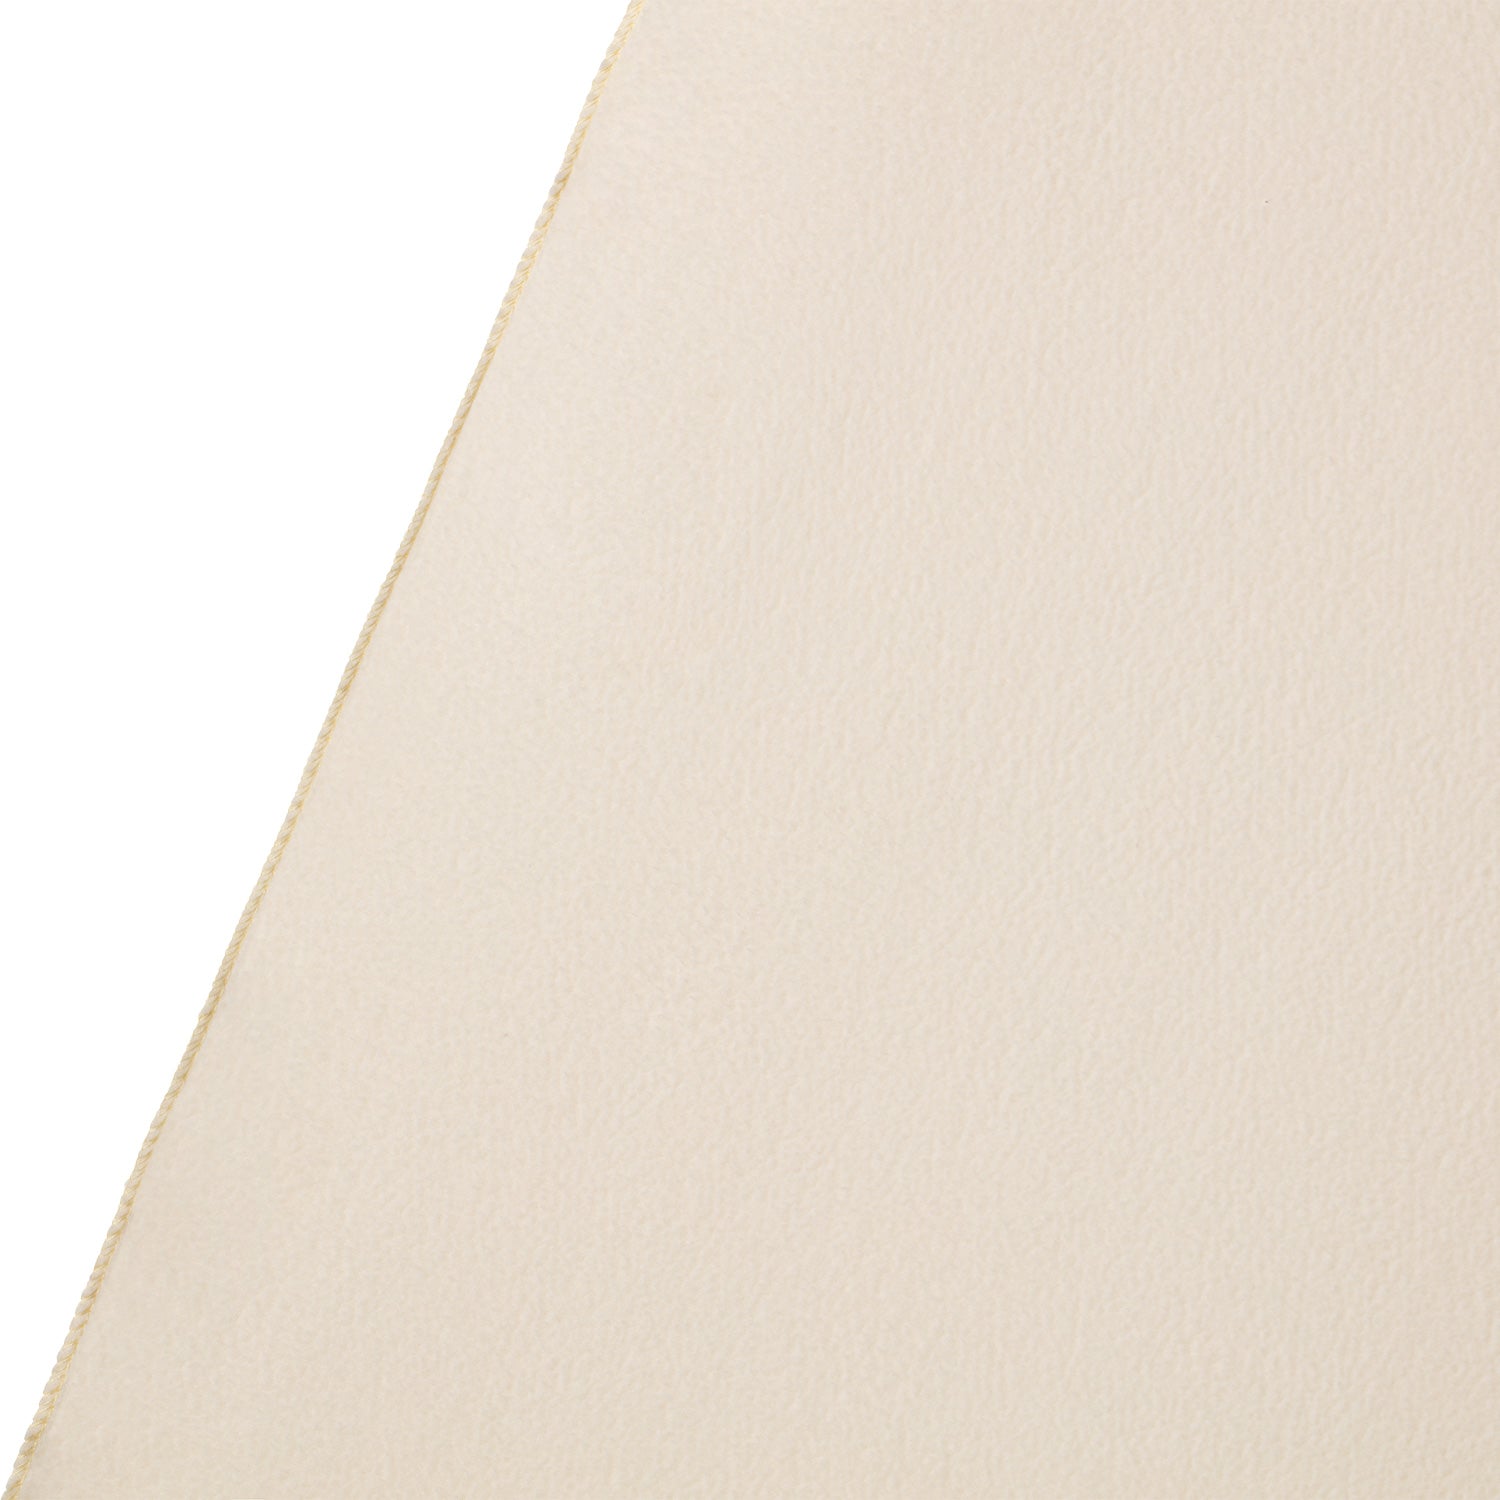 X-Drop Wrinkle-Resistant Backdrop - Buttermilk White (5' x 12')